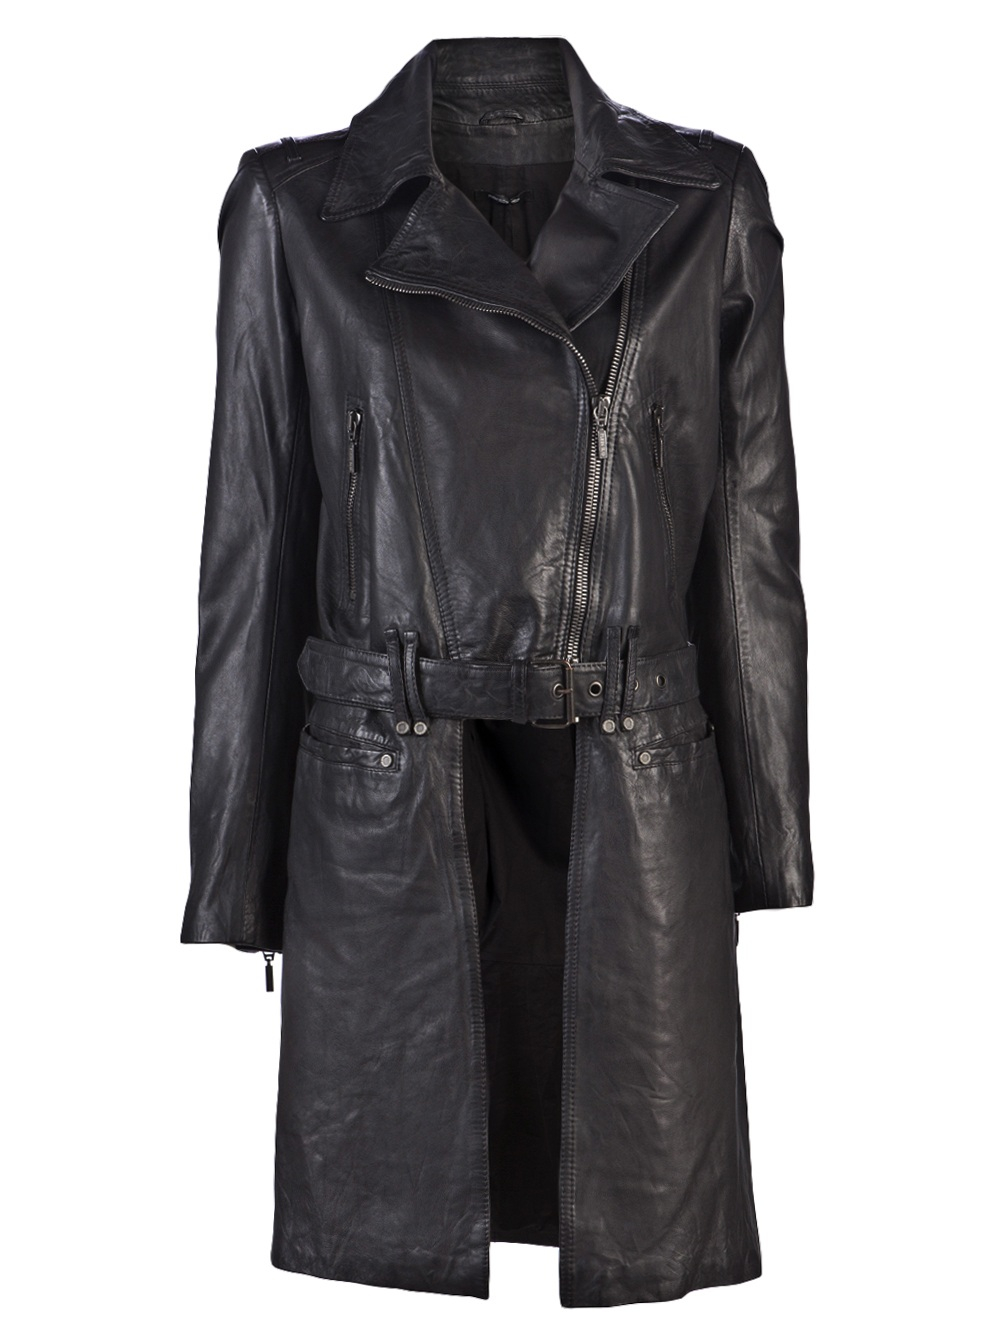 Lyst - Plein Sud Jeanius Coat Tail Leather Jacket in Black